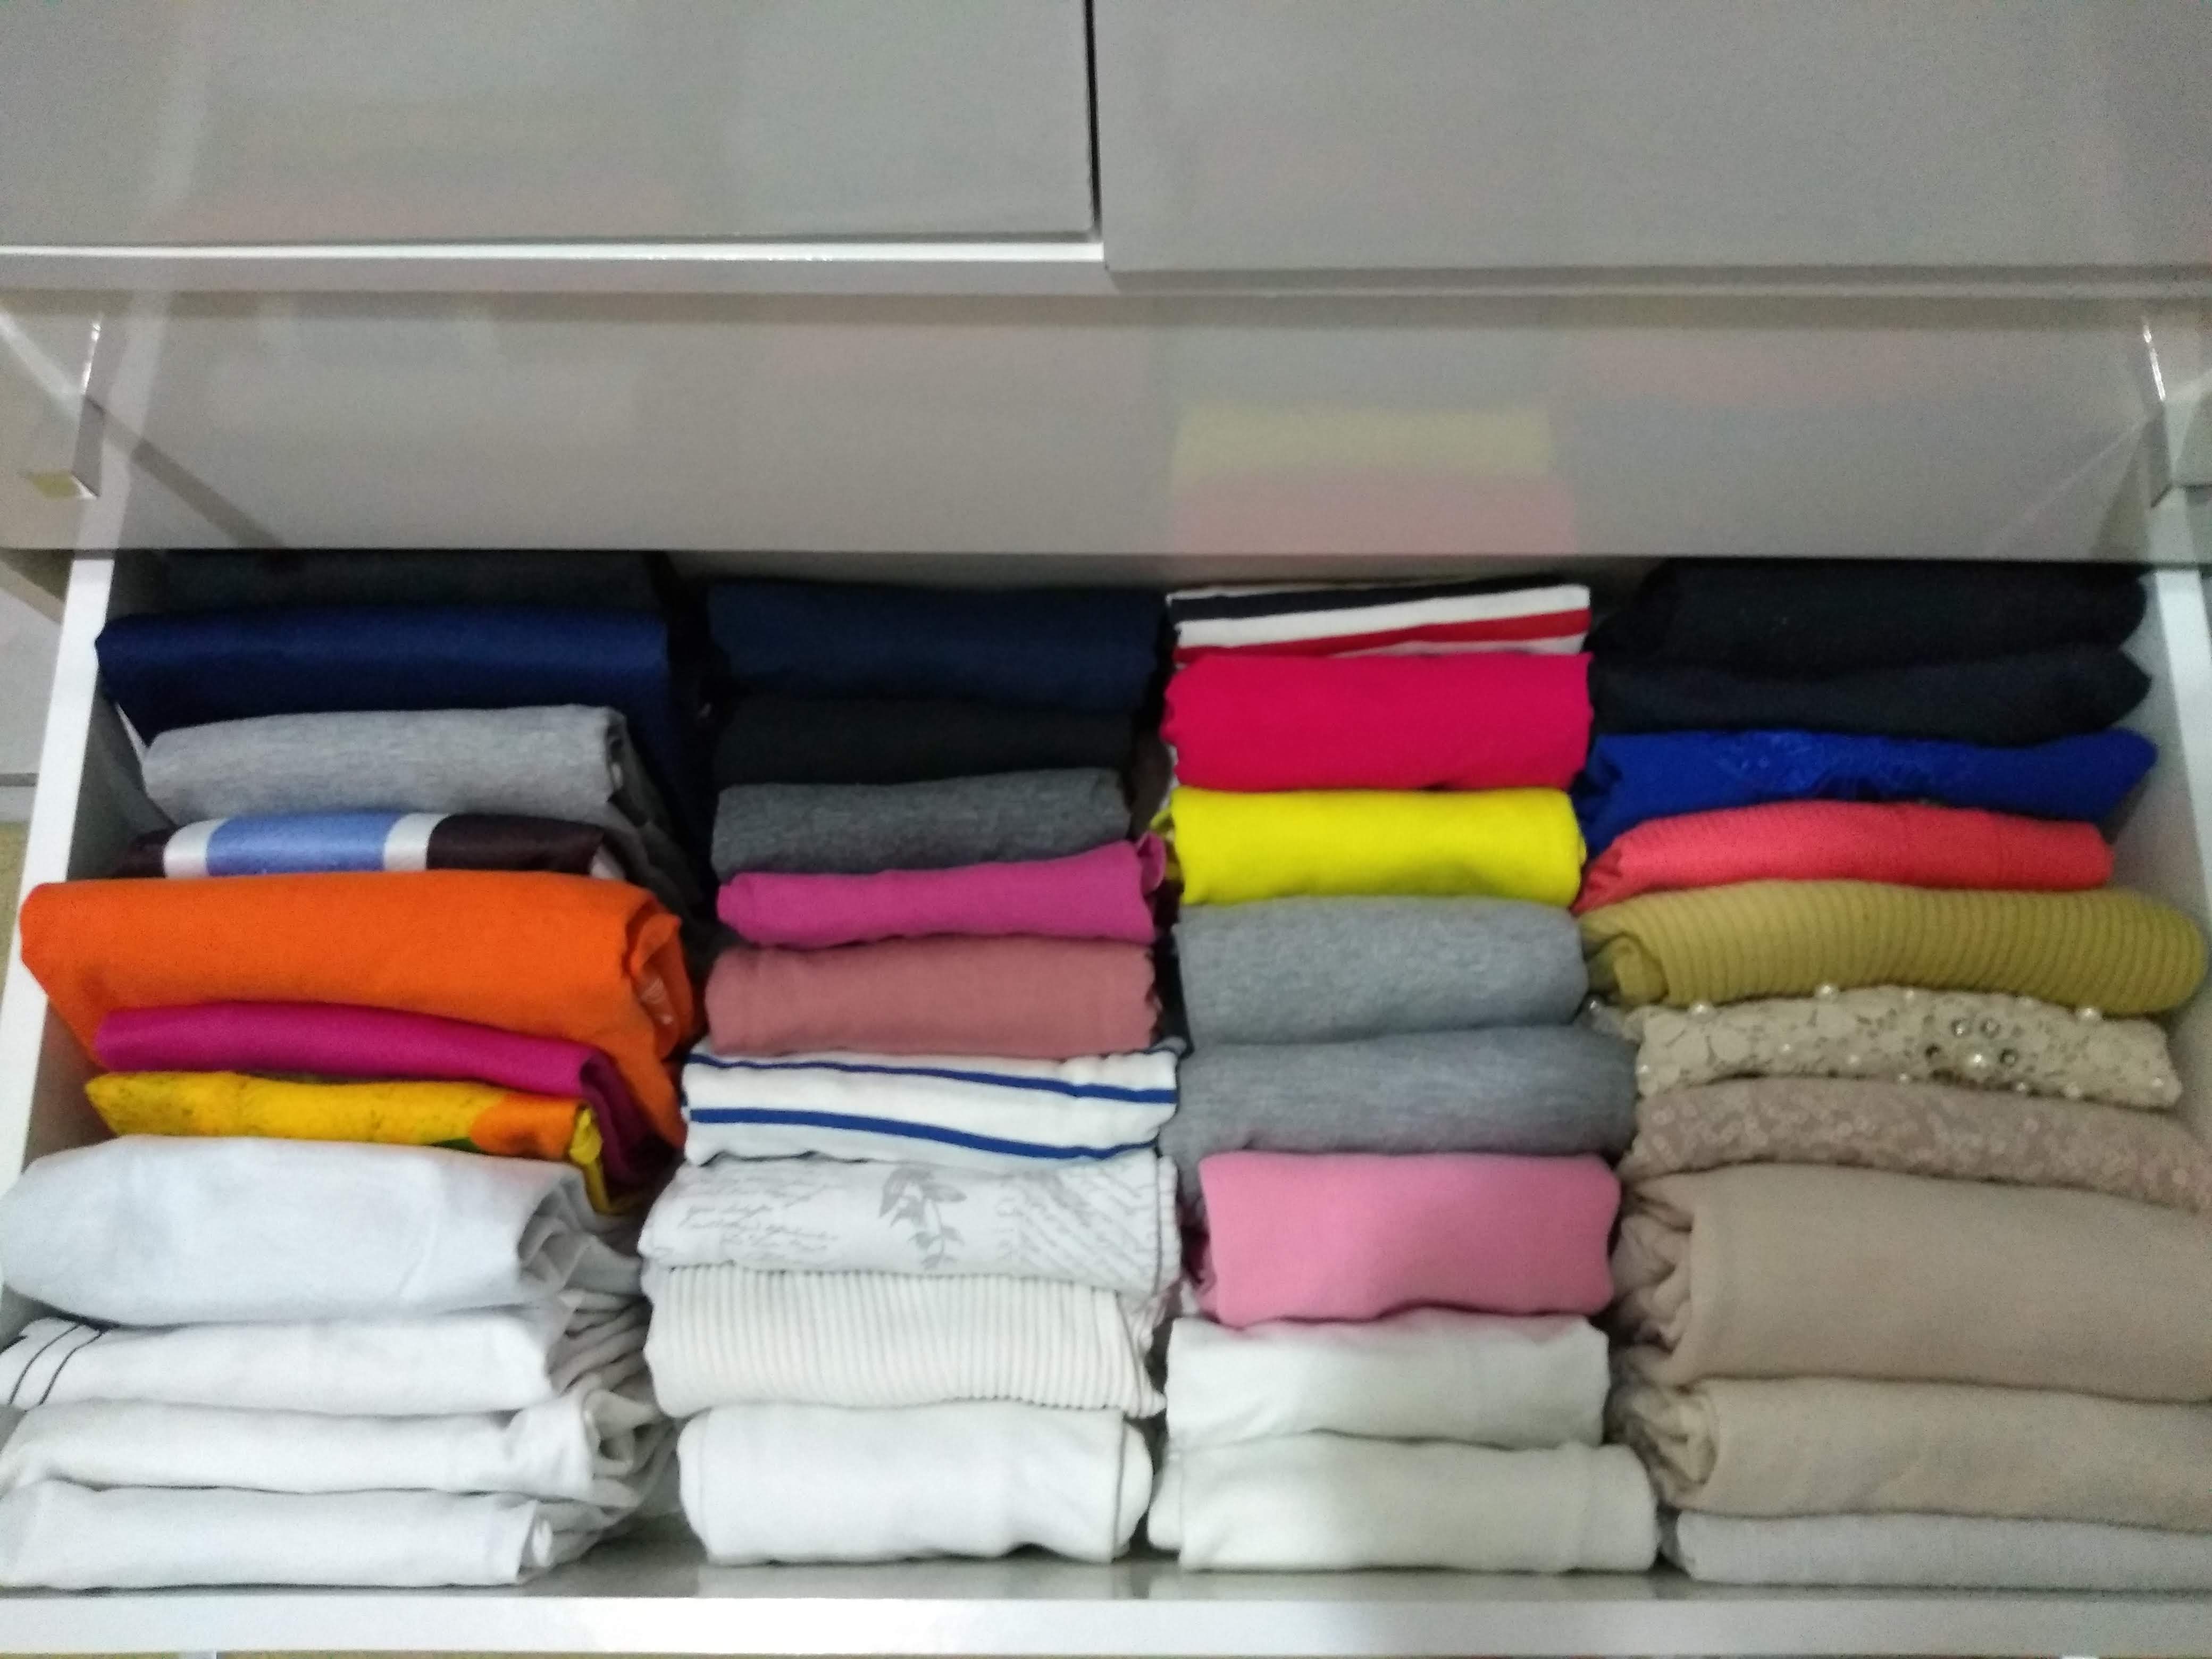 Blusas Organizadas na gaveta.